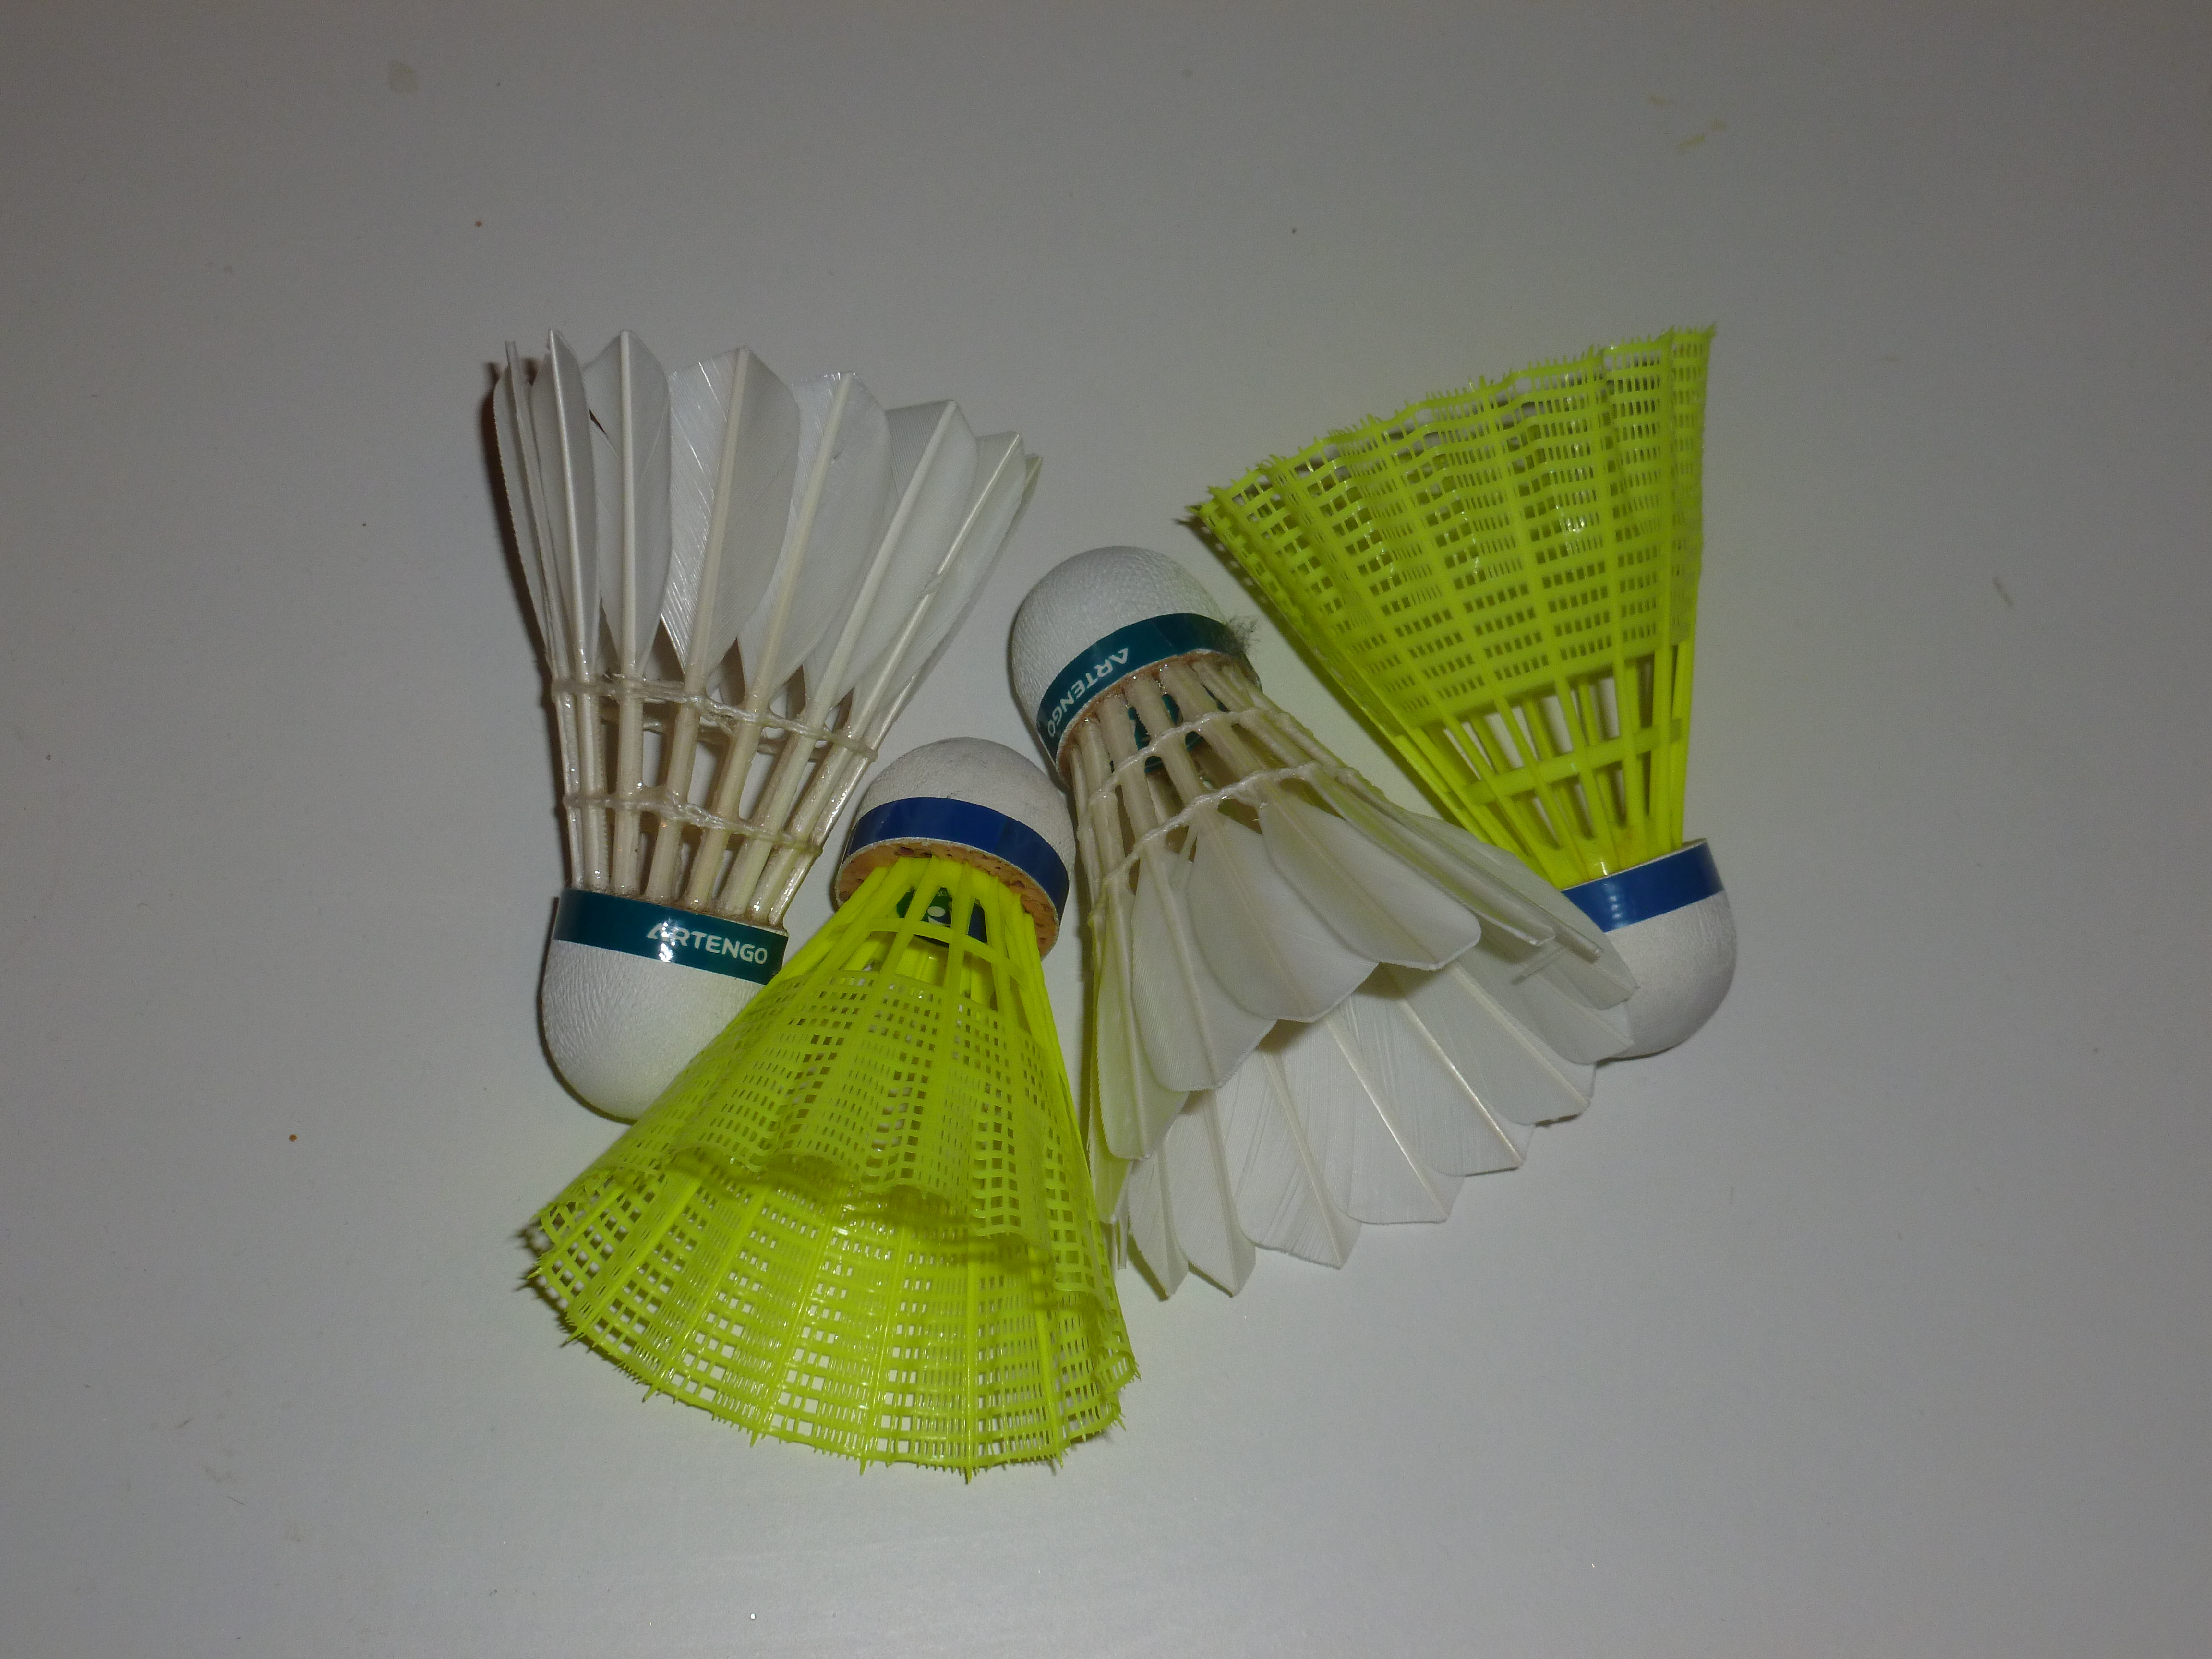 artengo badminton cork